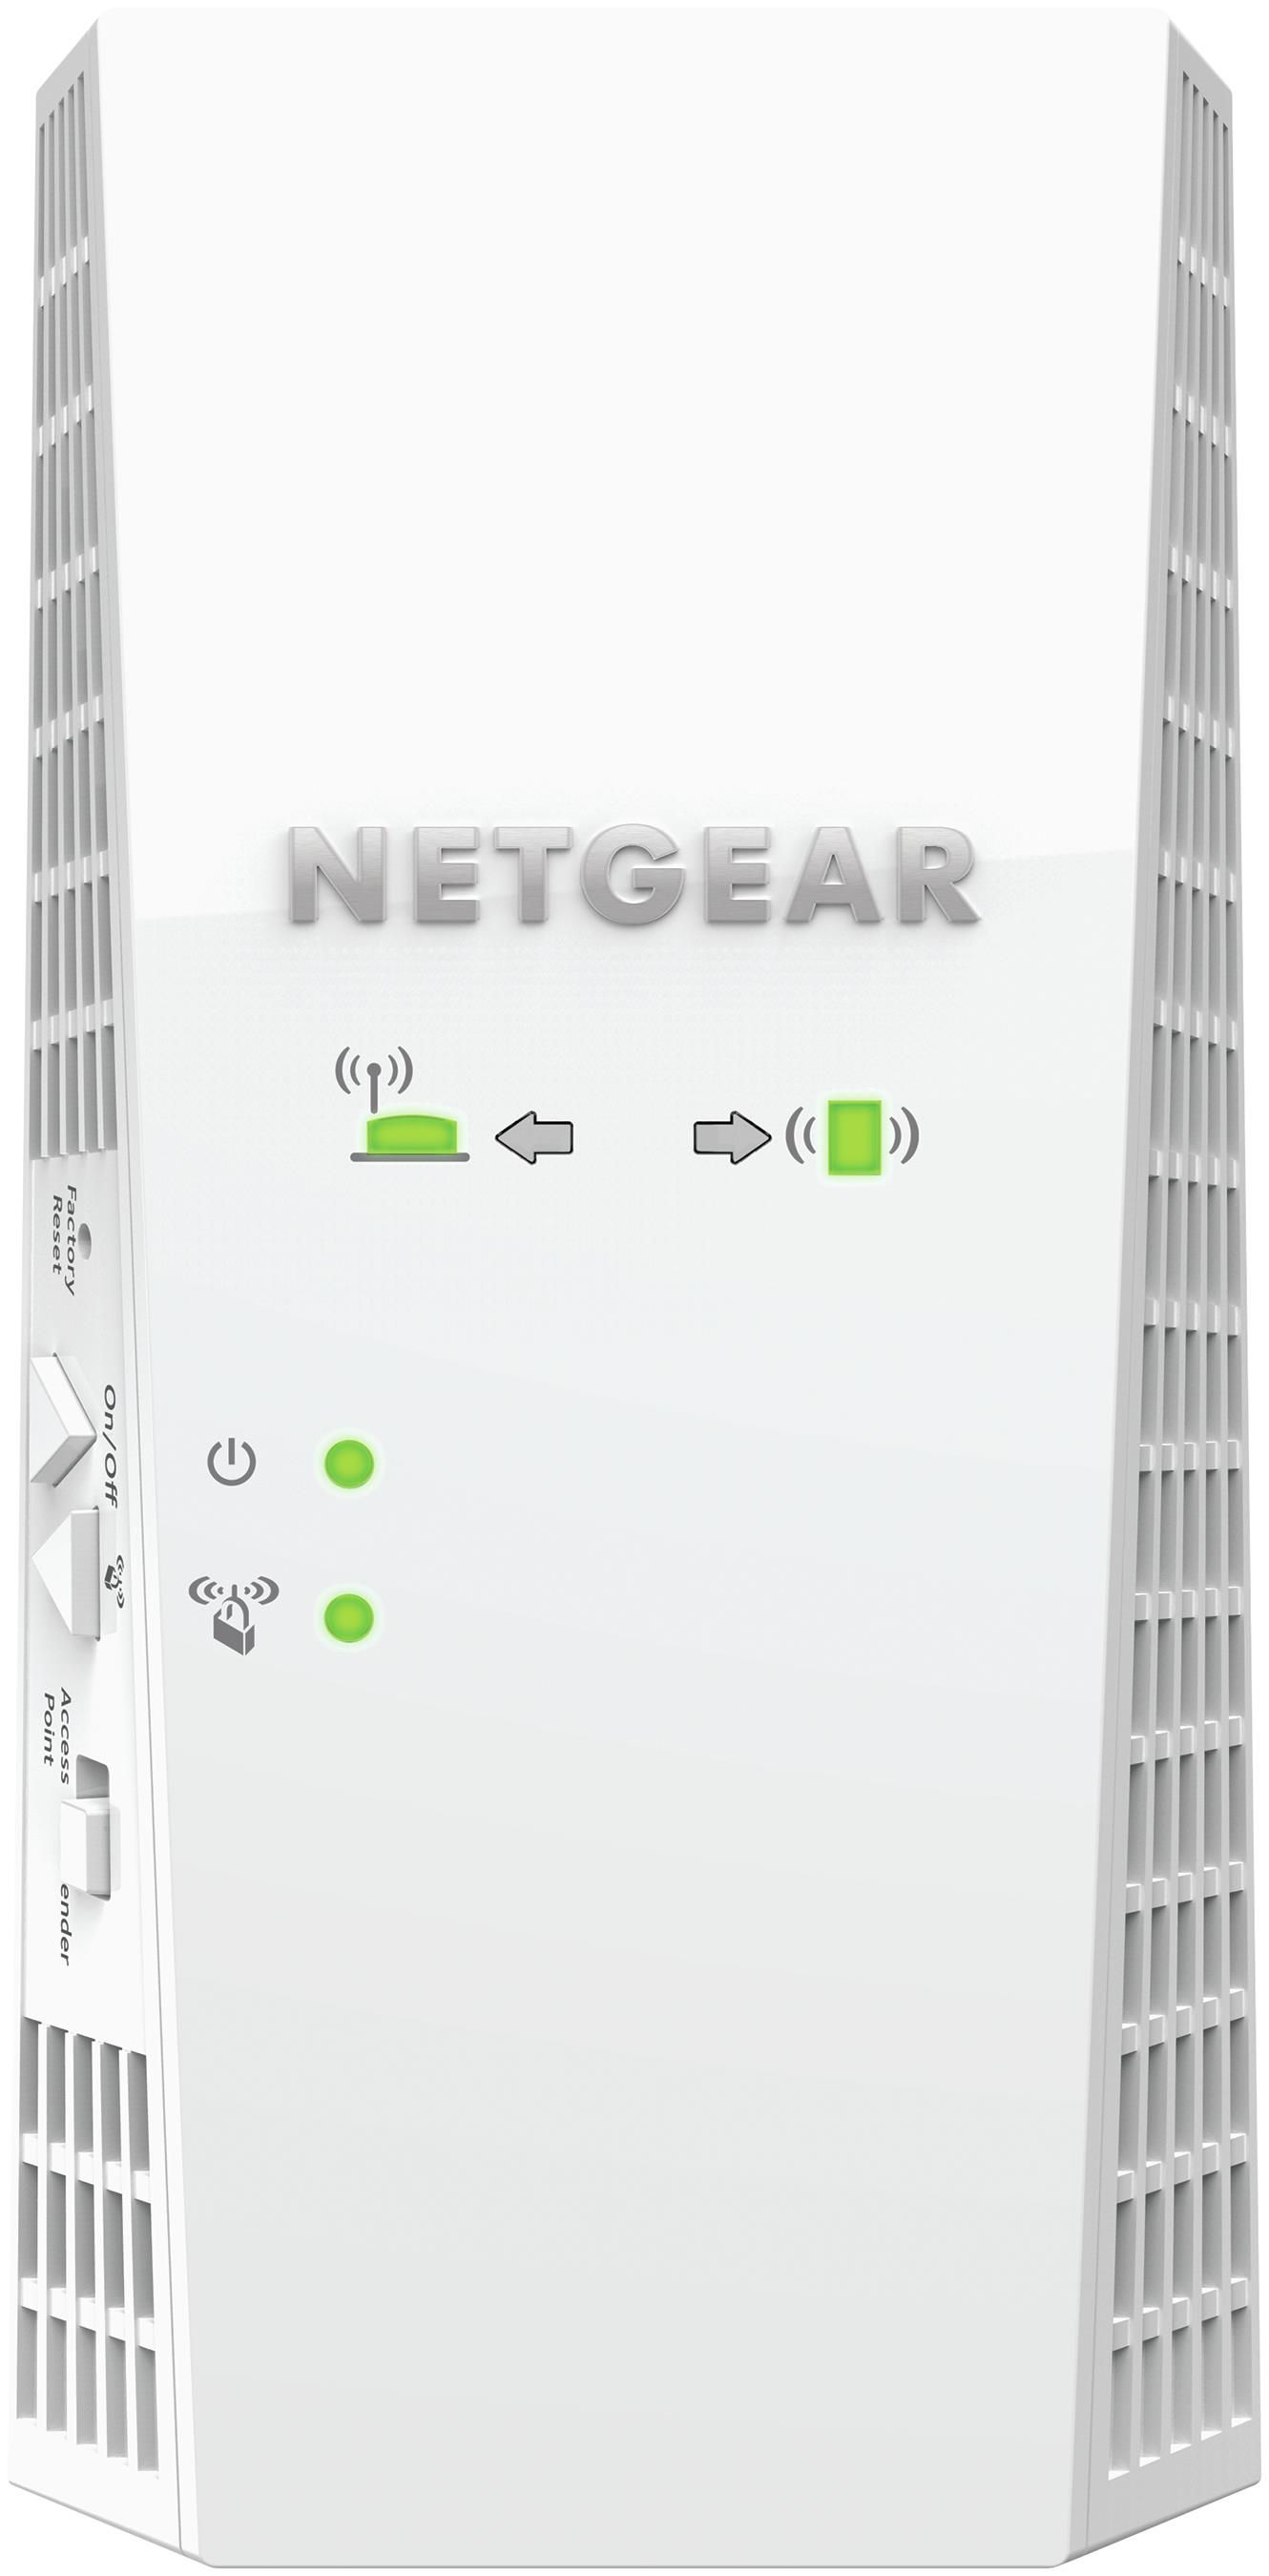 NETGEAR Nighthawk EX7300 Wi-Fi